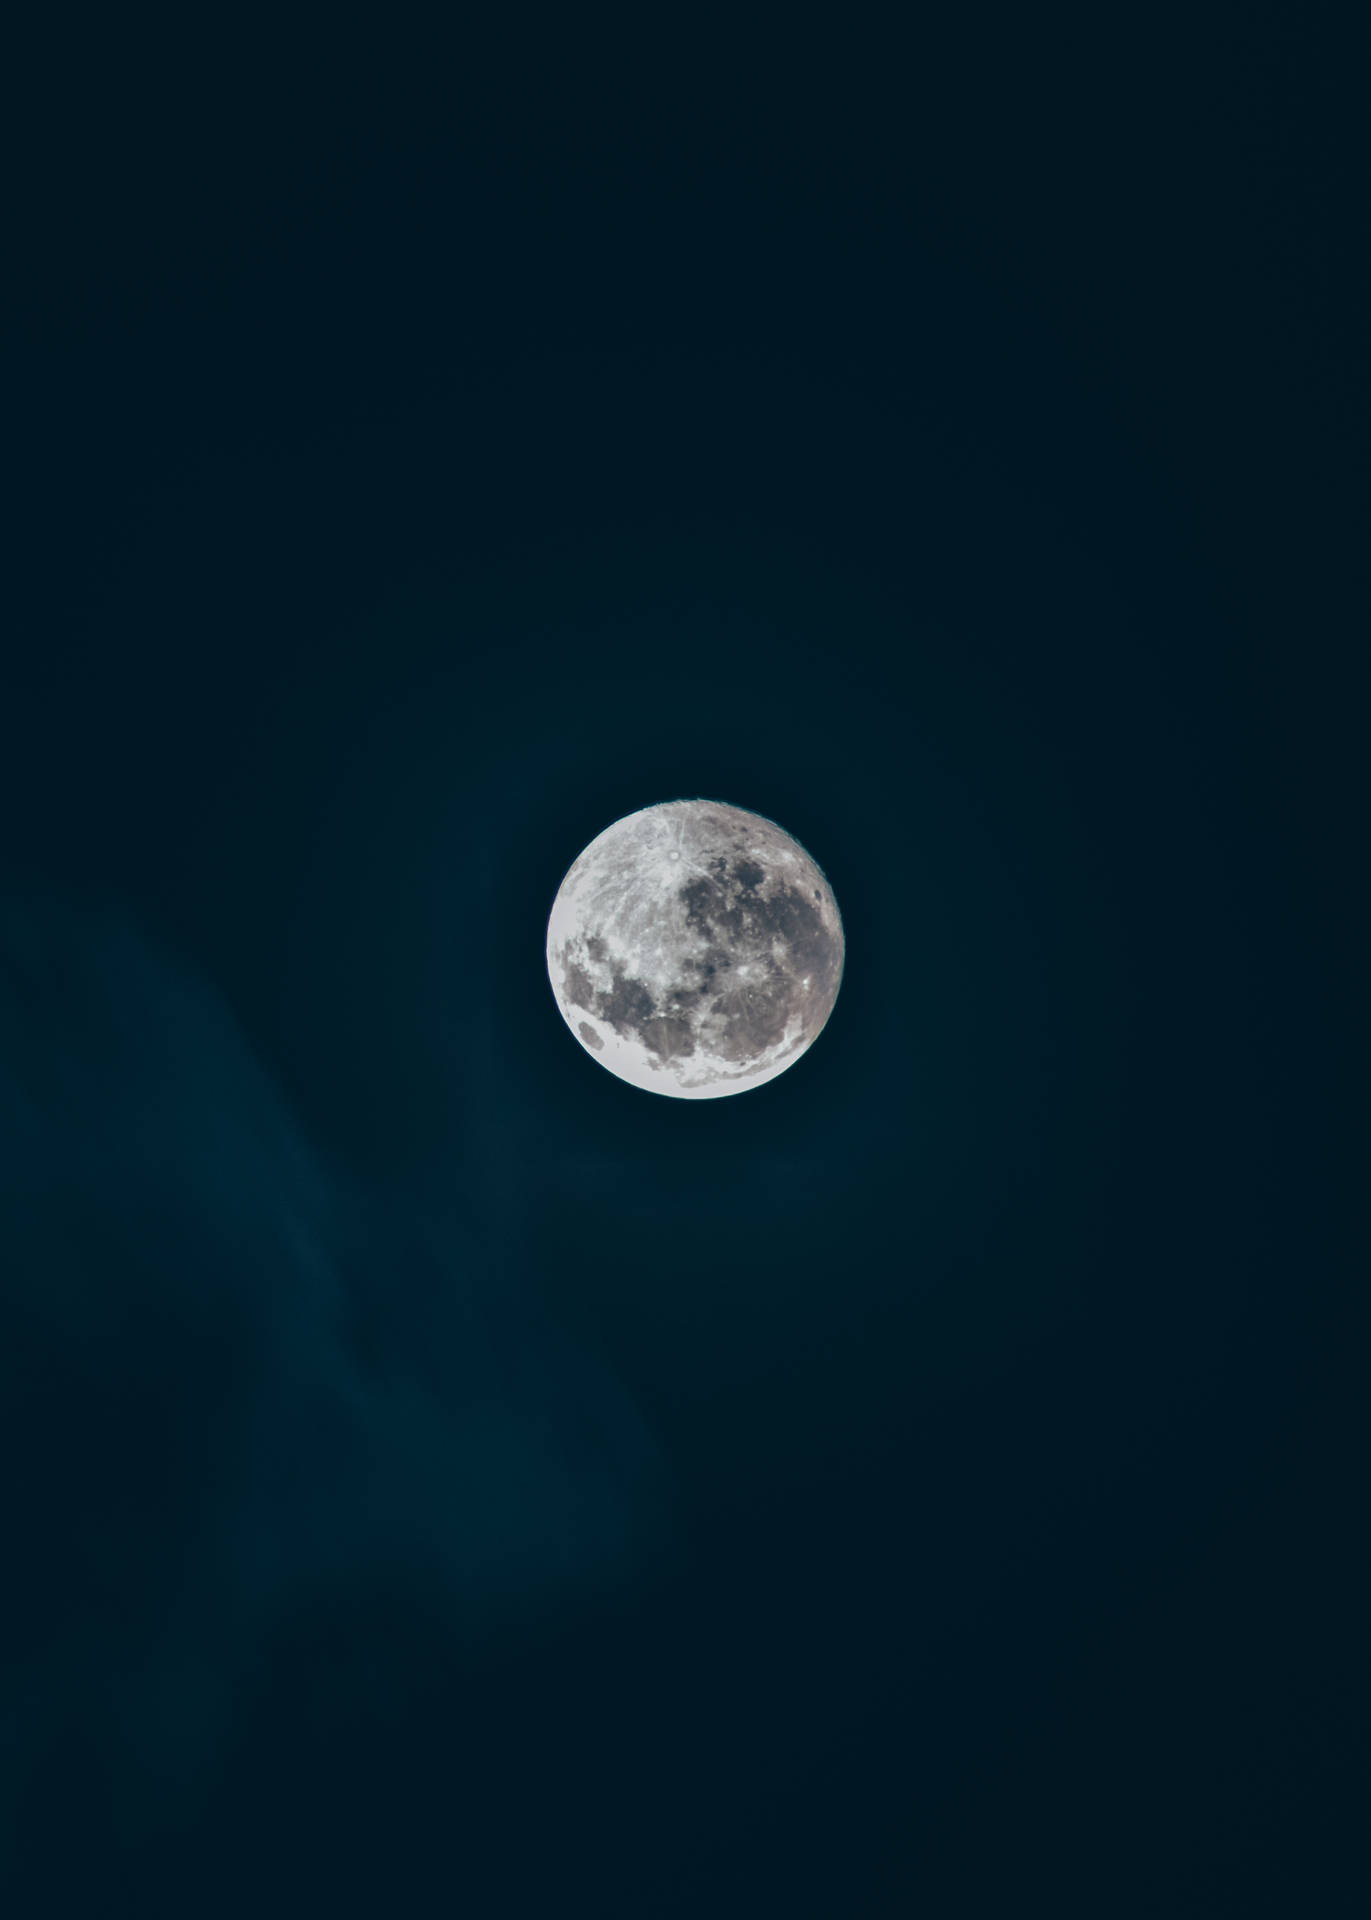 Beautiful Full Moon Clear Night Sky Background